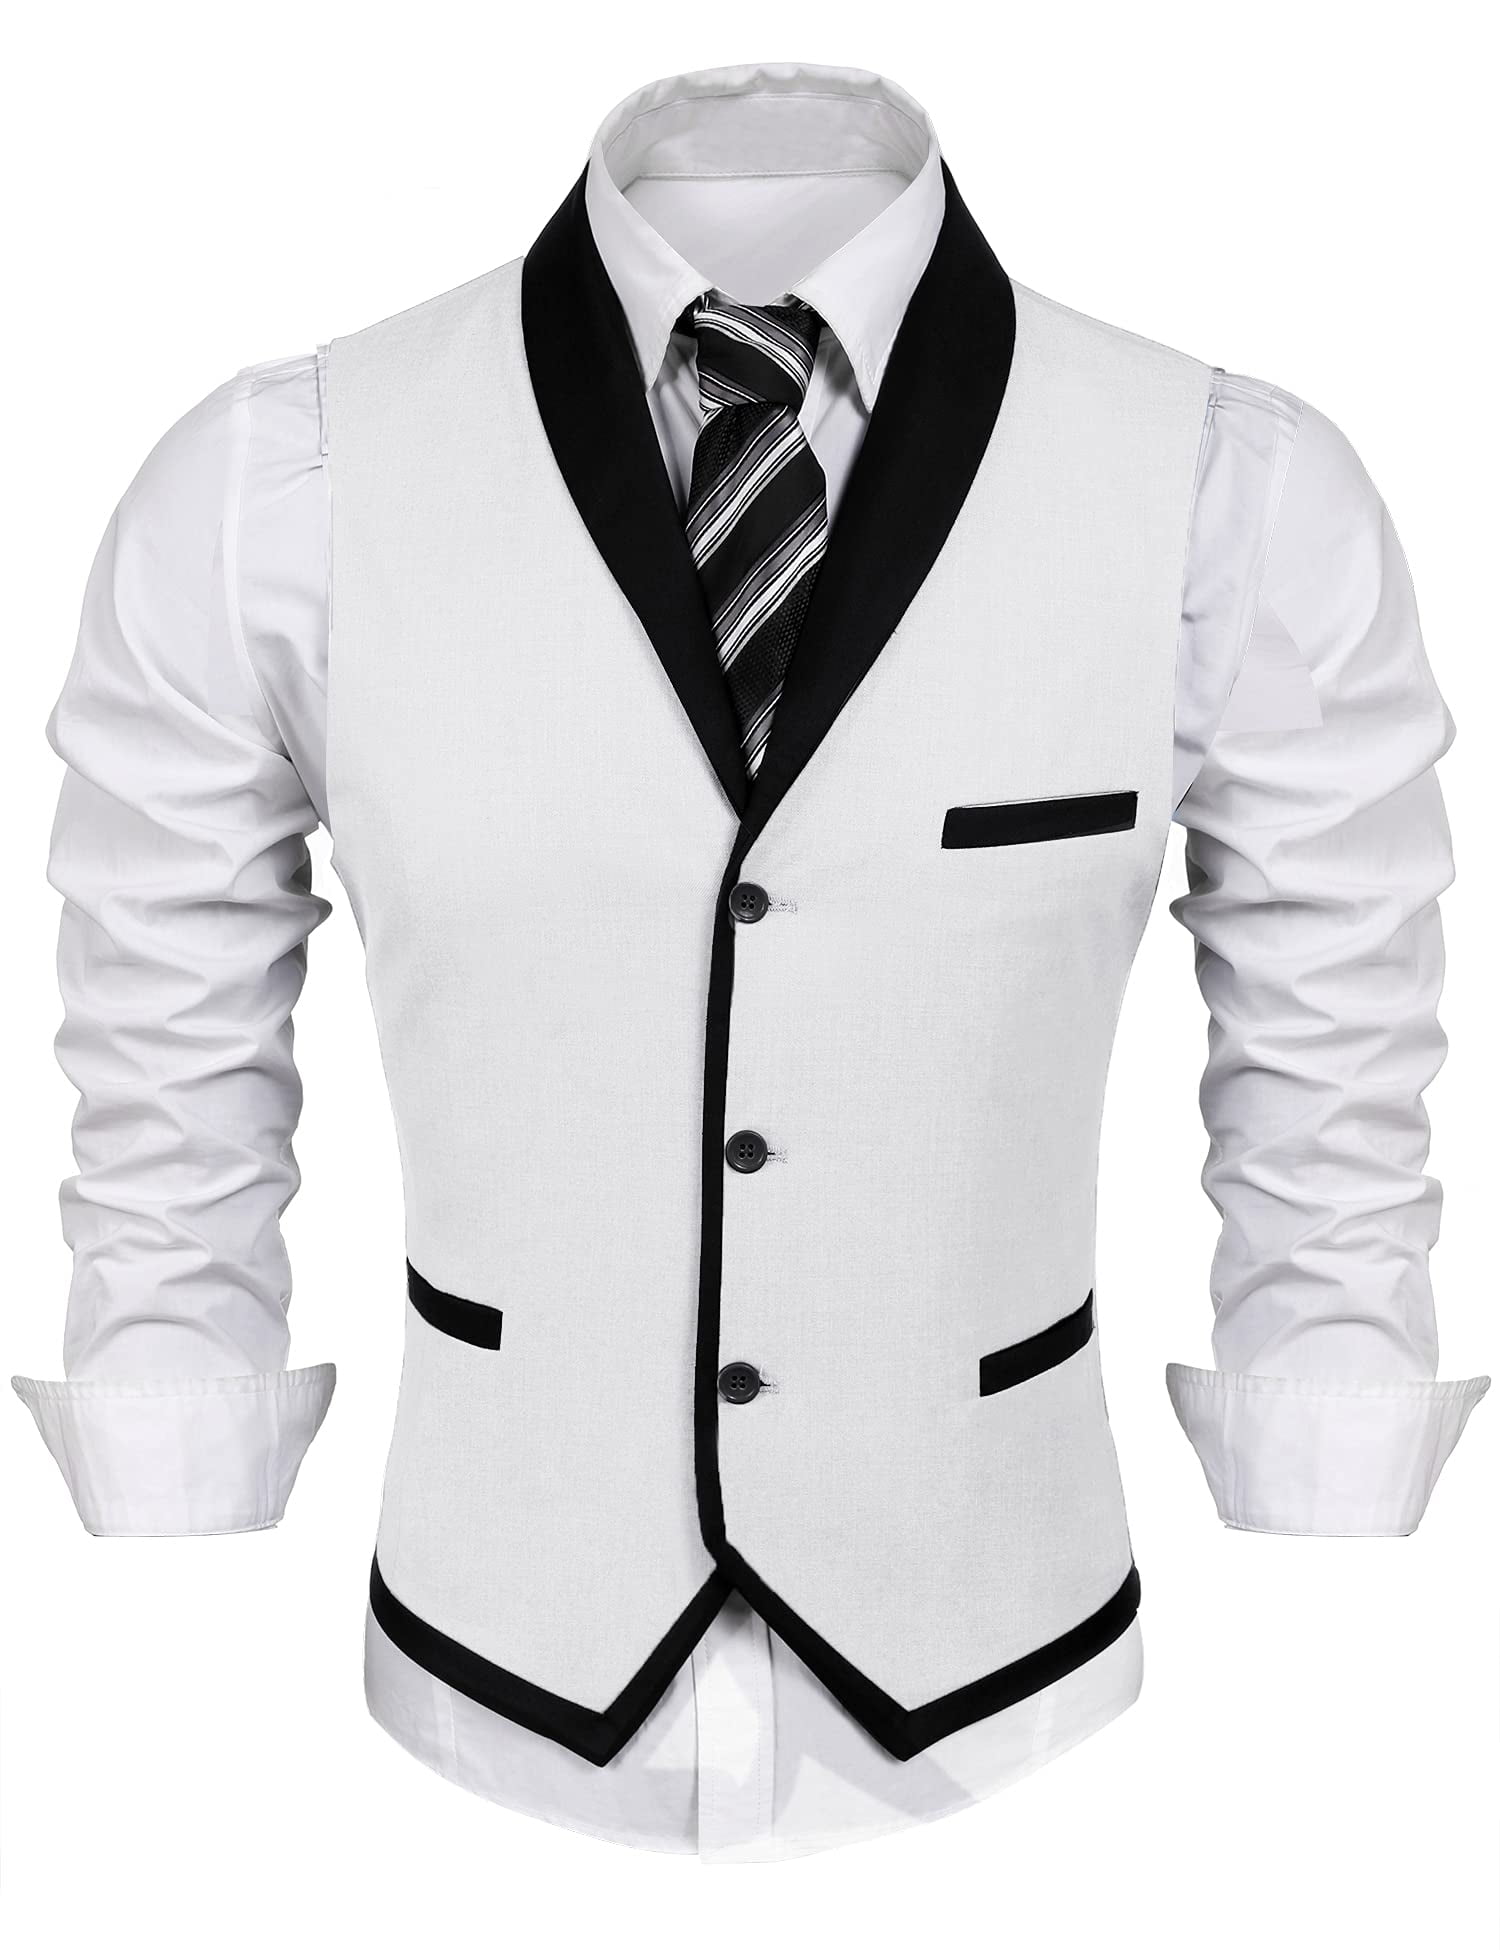 ETHAN Men's Suit Vests Dress White Suit for Men Formal Vest Elegant ...